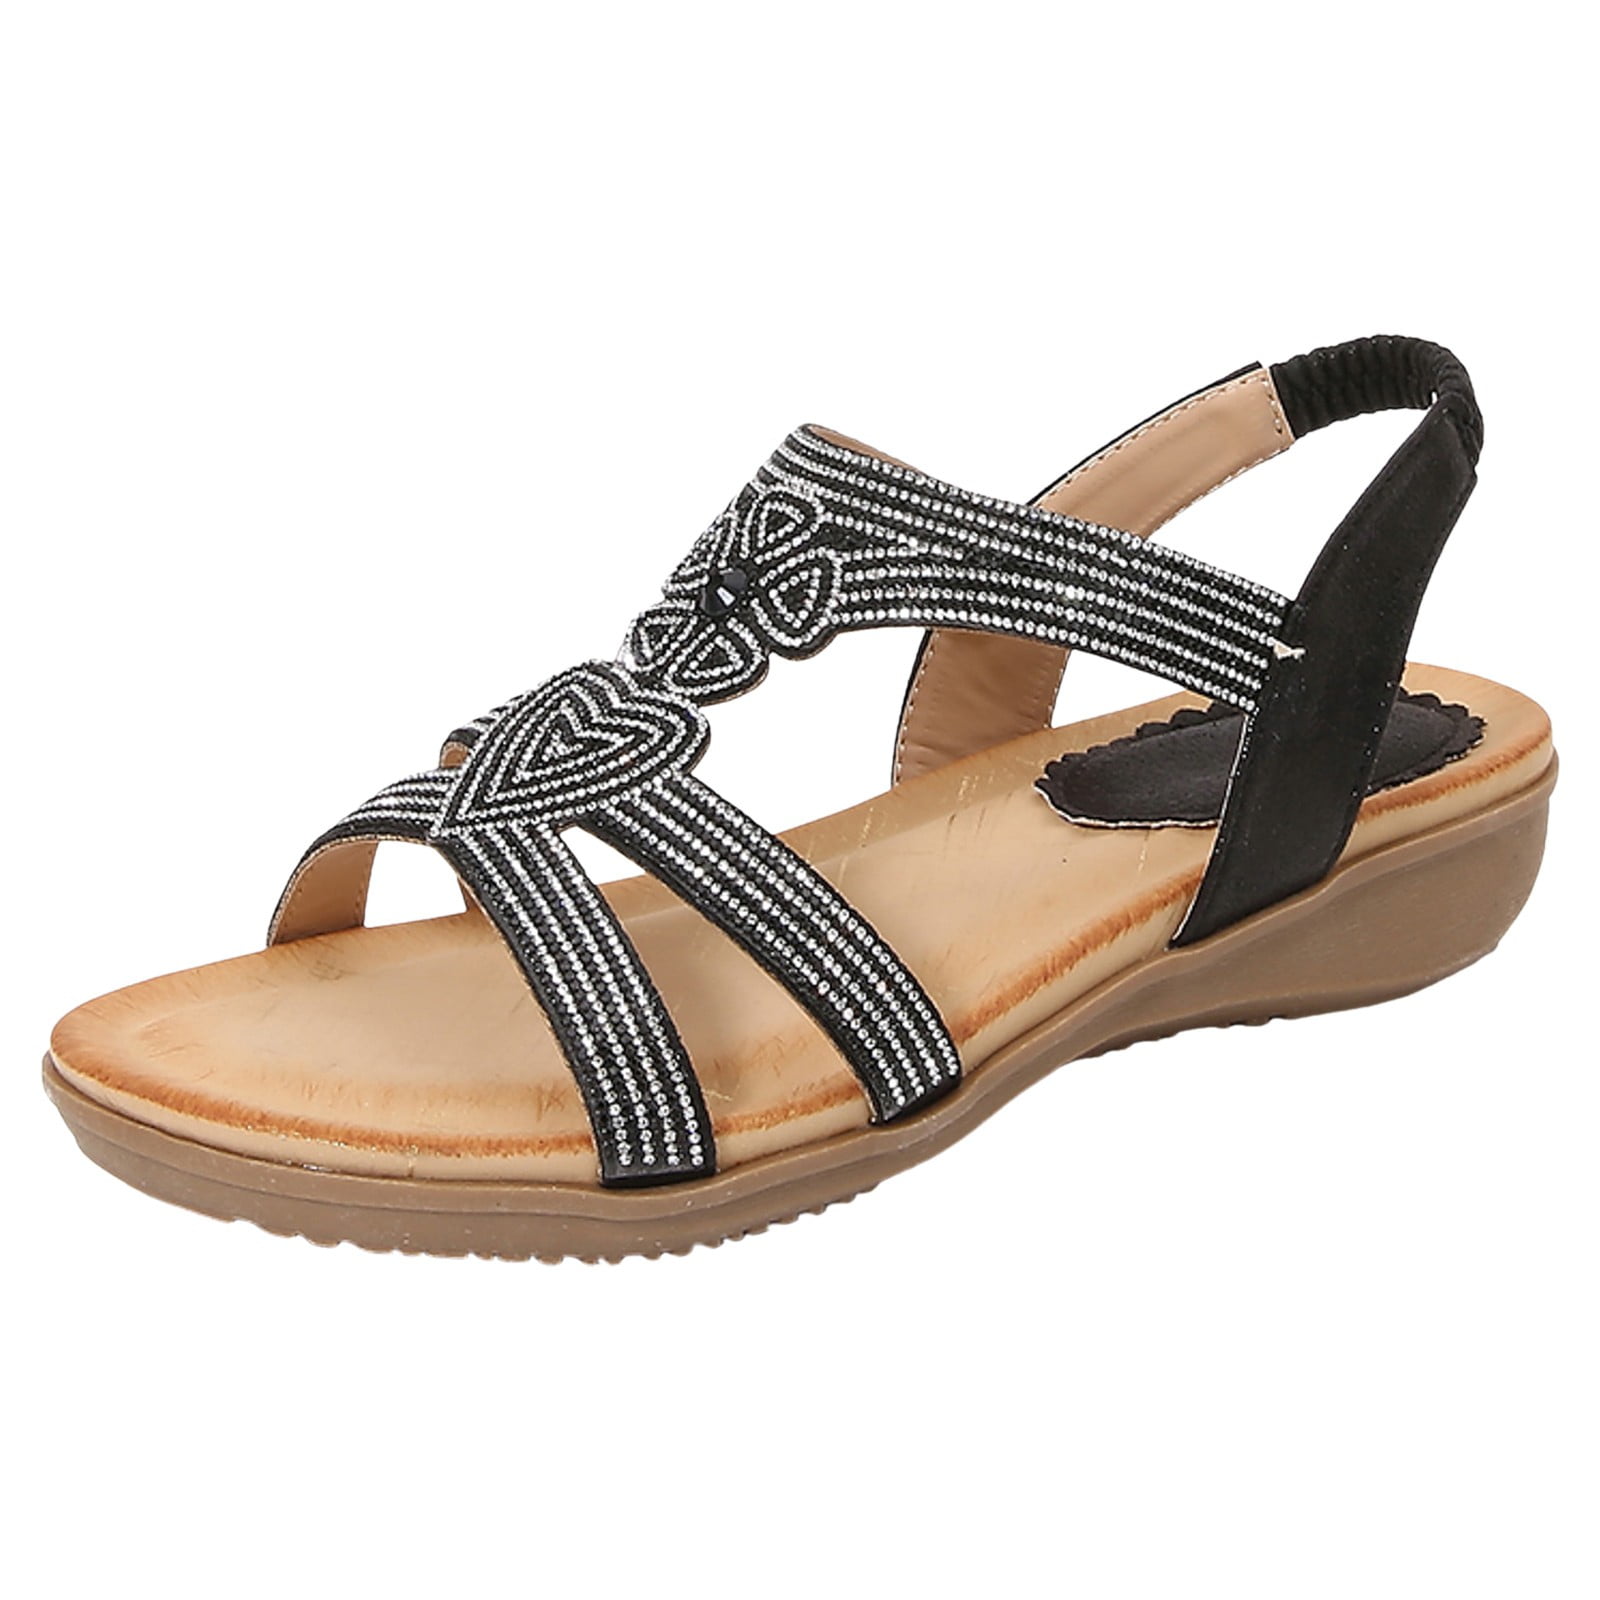 SZXZYGS Womens Sandals Women Shoes Boho Style Flip Flops Beaded ...